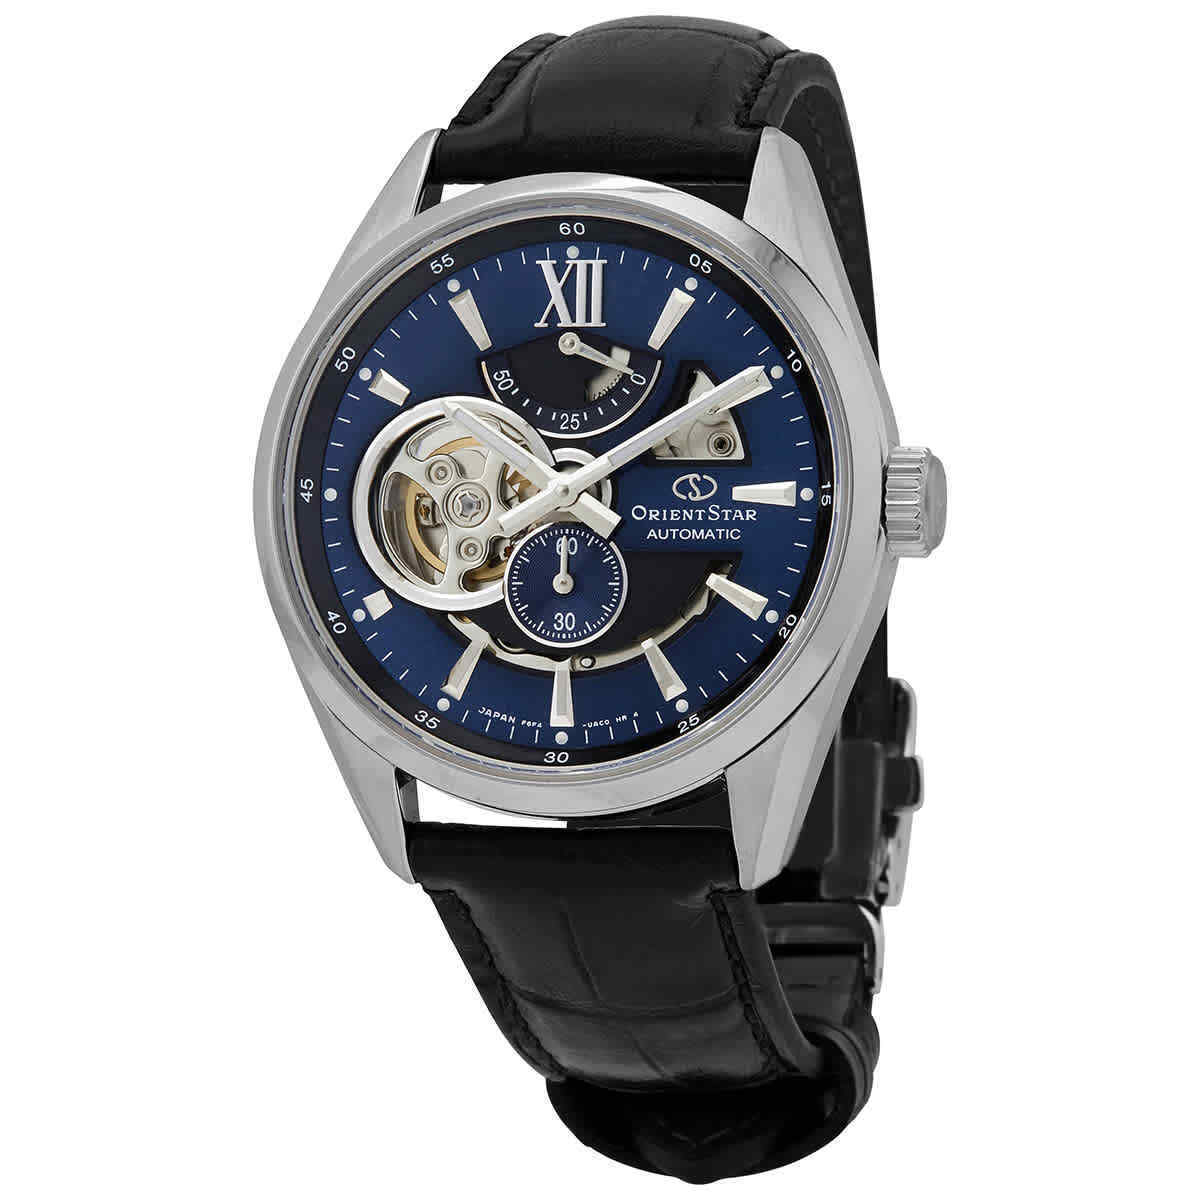 Orient Star Automatic Blue Dial Men's Watch RE-AV0005L00B